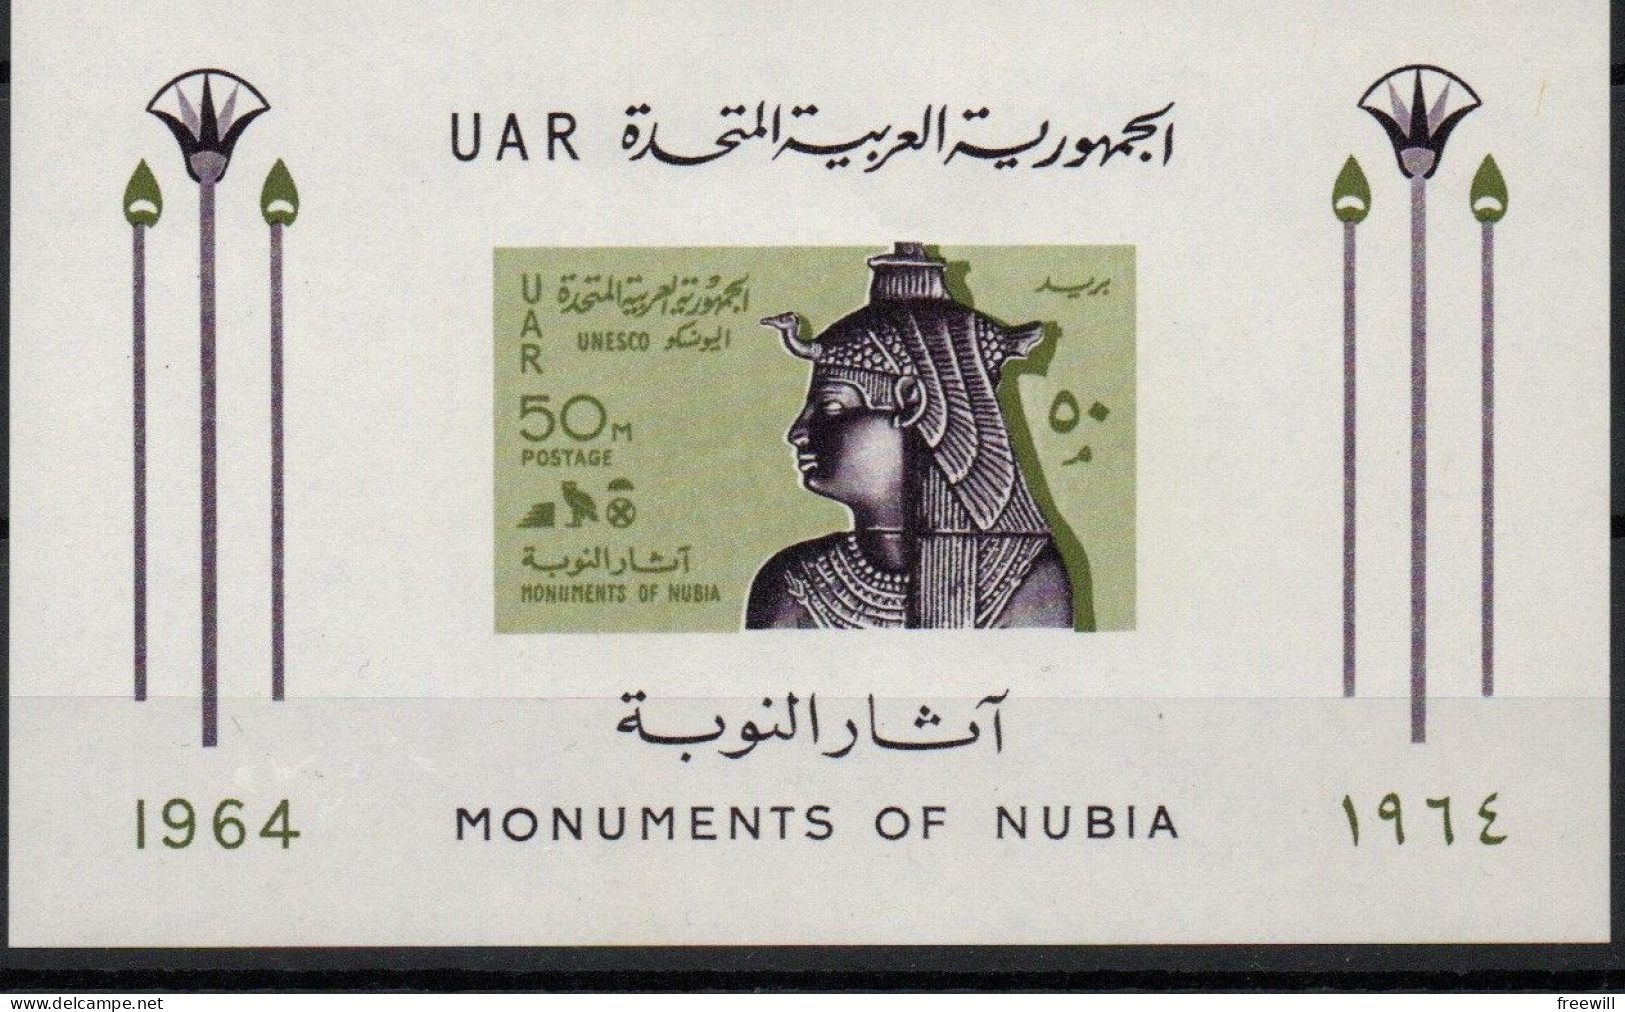 Sauvegarde des monuments de Nubie -Saving monuments of Nubia XX